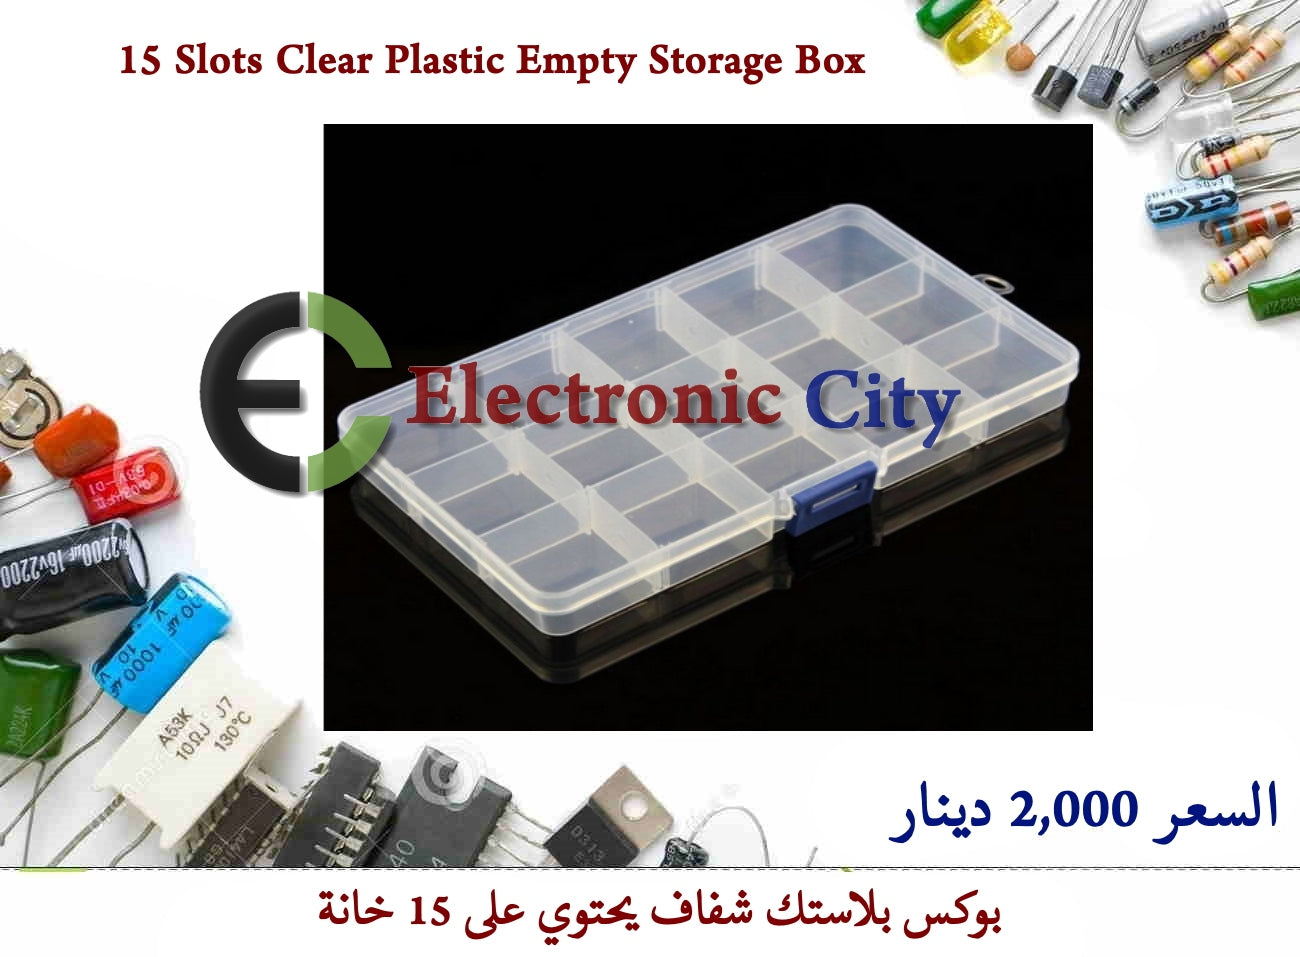 15 Slots Clear Plastic Empty Storage Box